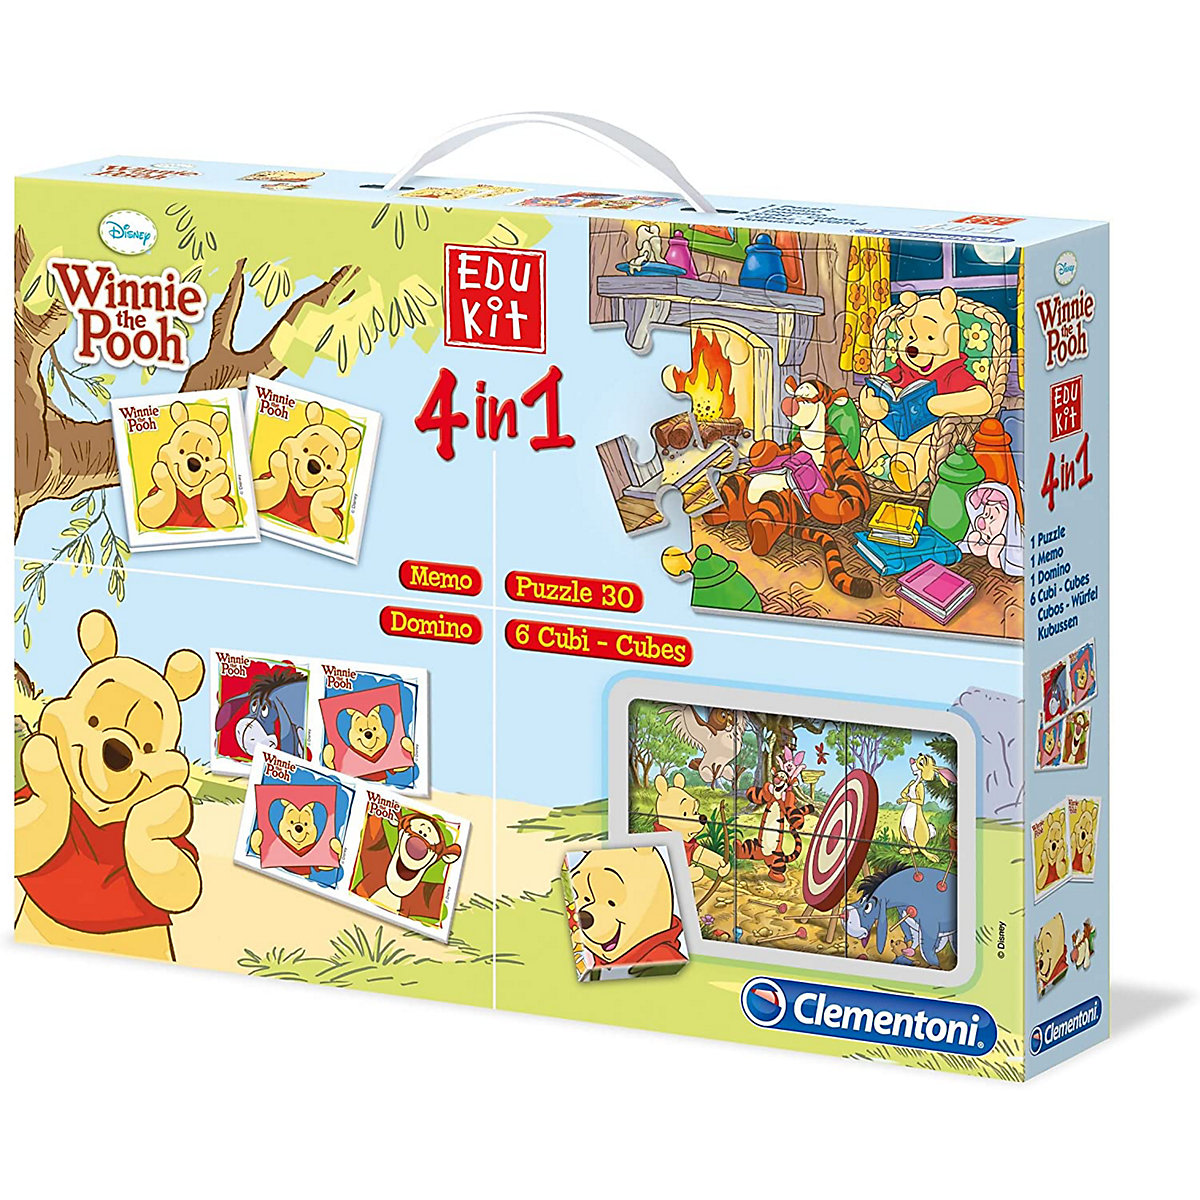 Clementoni Spieleset Winnie Pooh 4in1 (Memo Domino Puzzle Cubes)